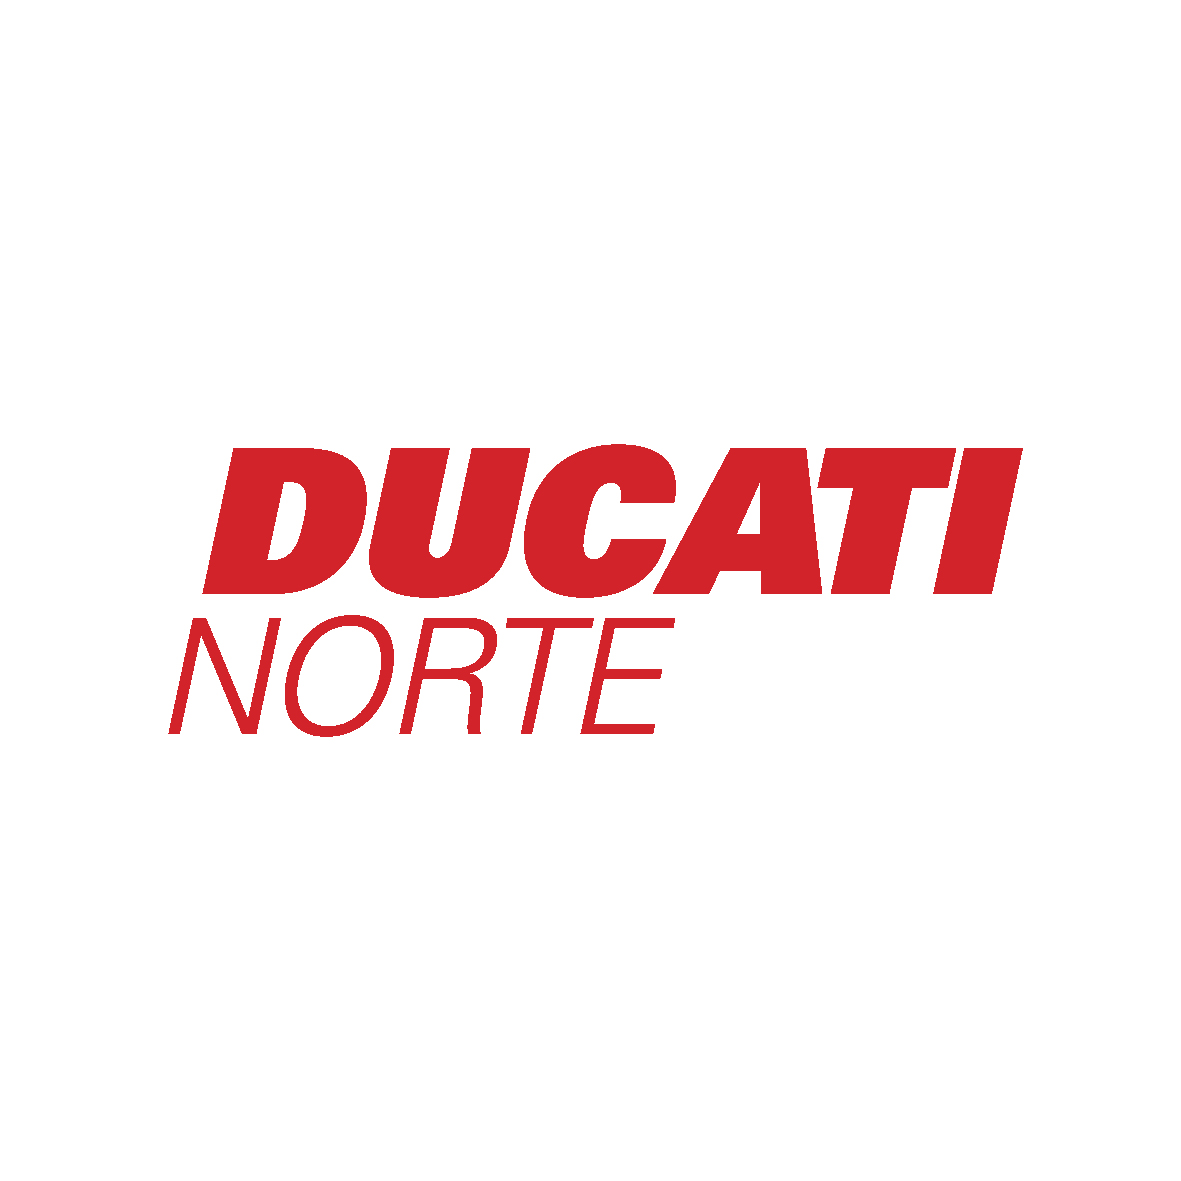 Ducati Norte